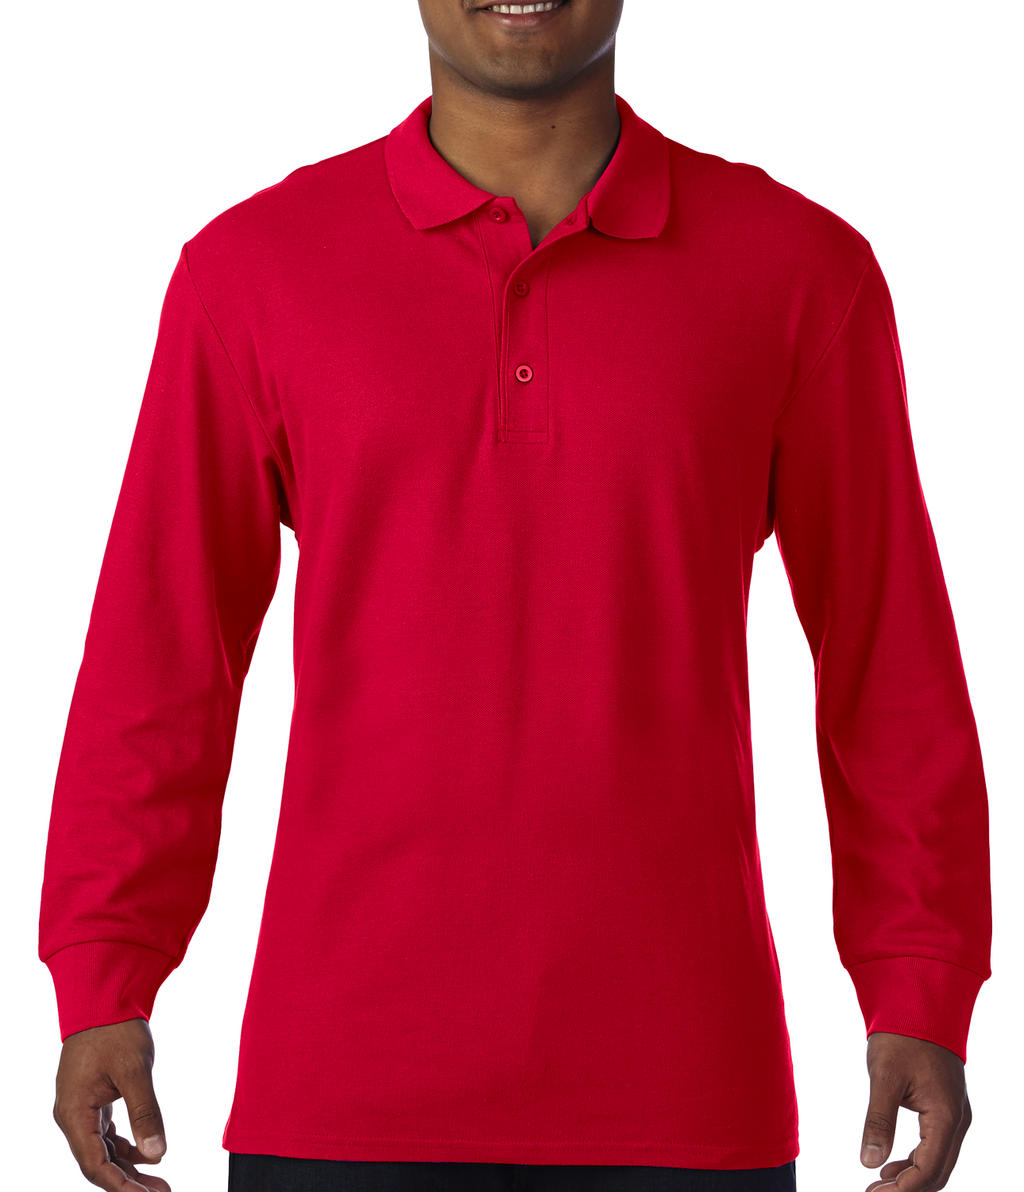 Gildan Herren Polo Shirt Langarmshirt Piqué Langarm Hemd Freizeit Top